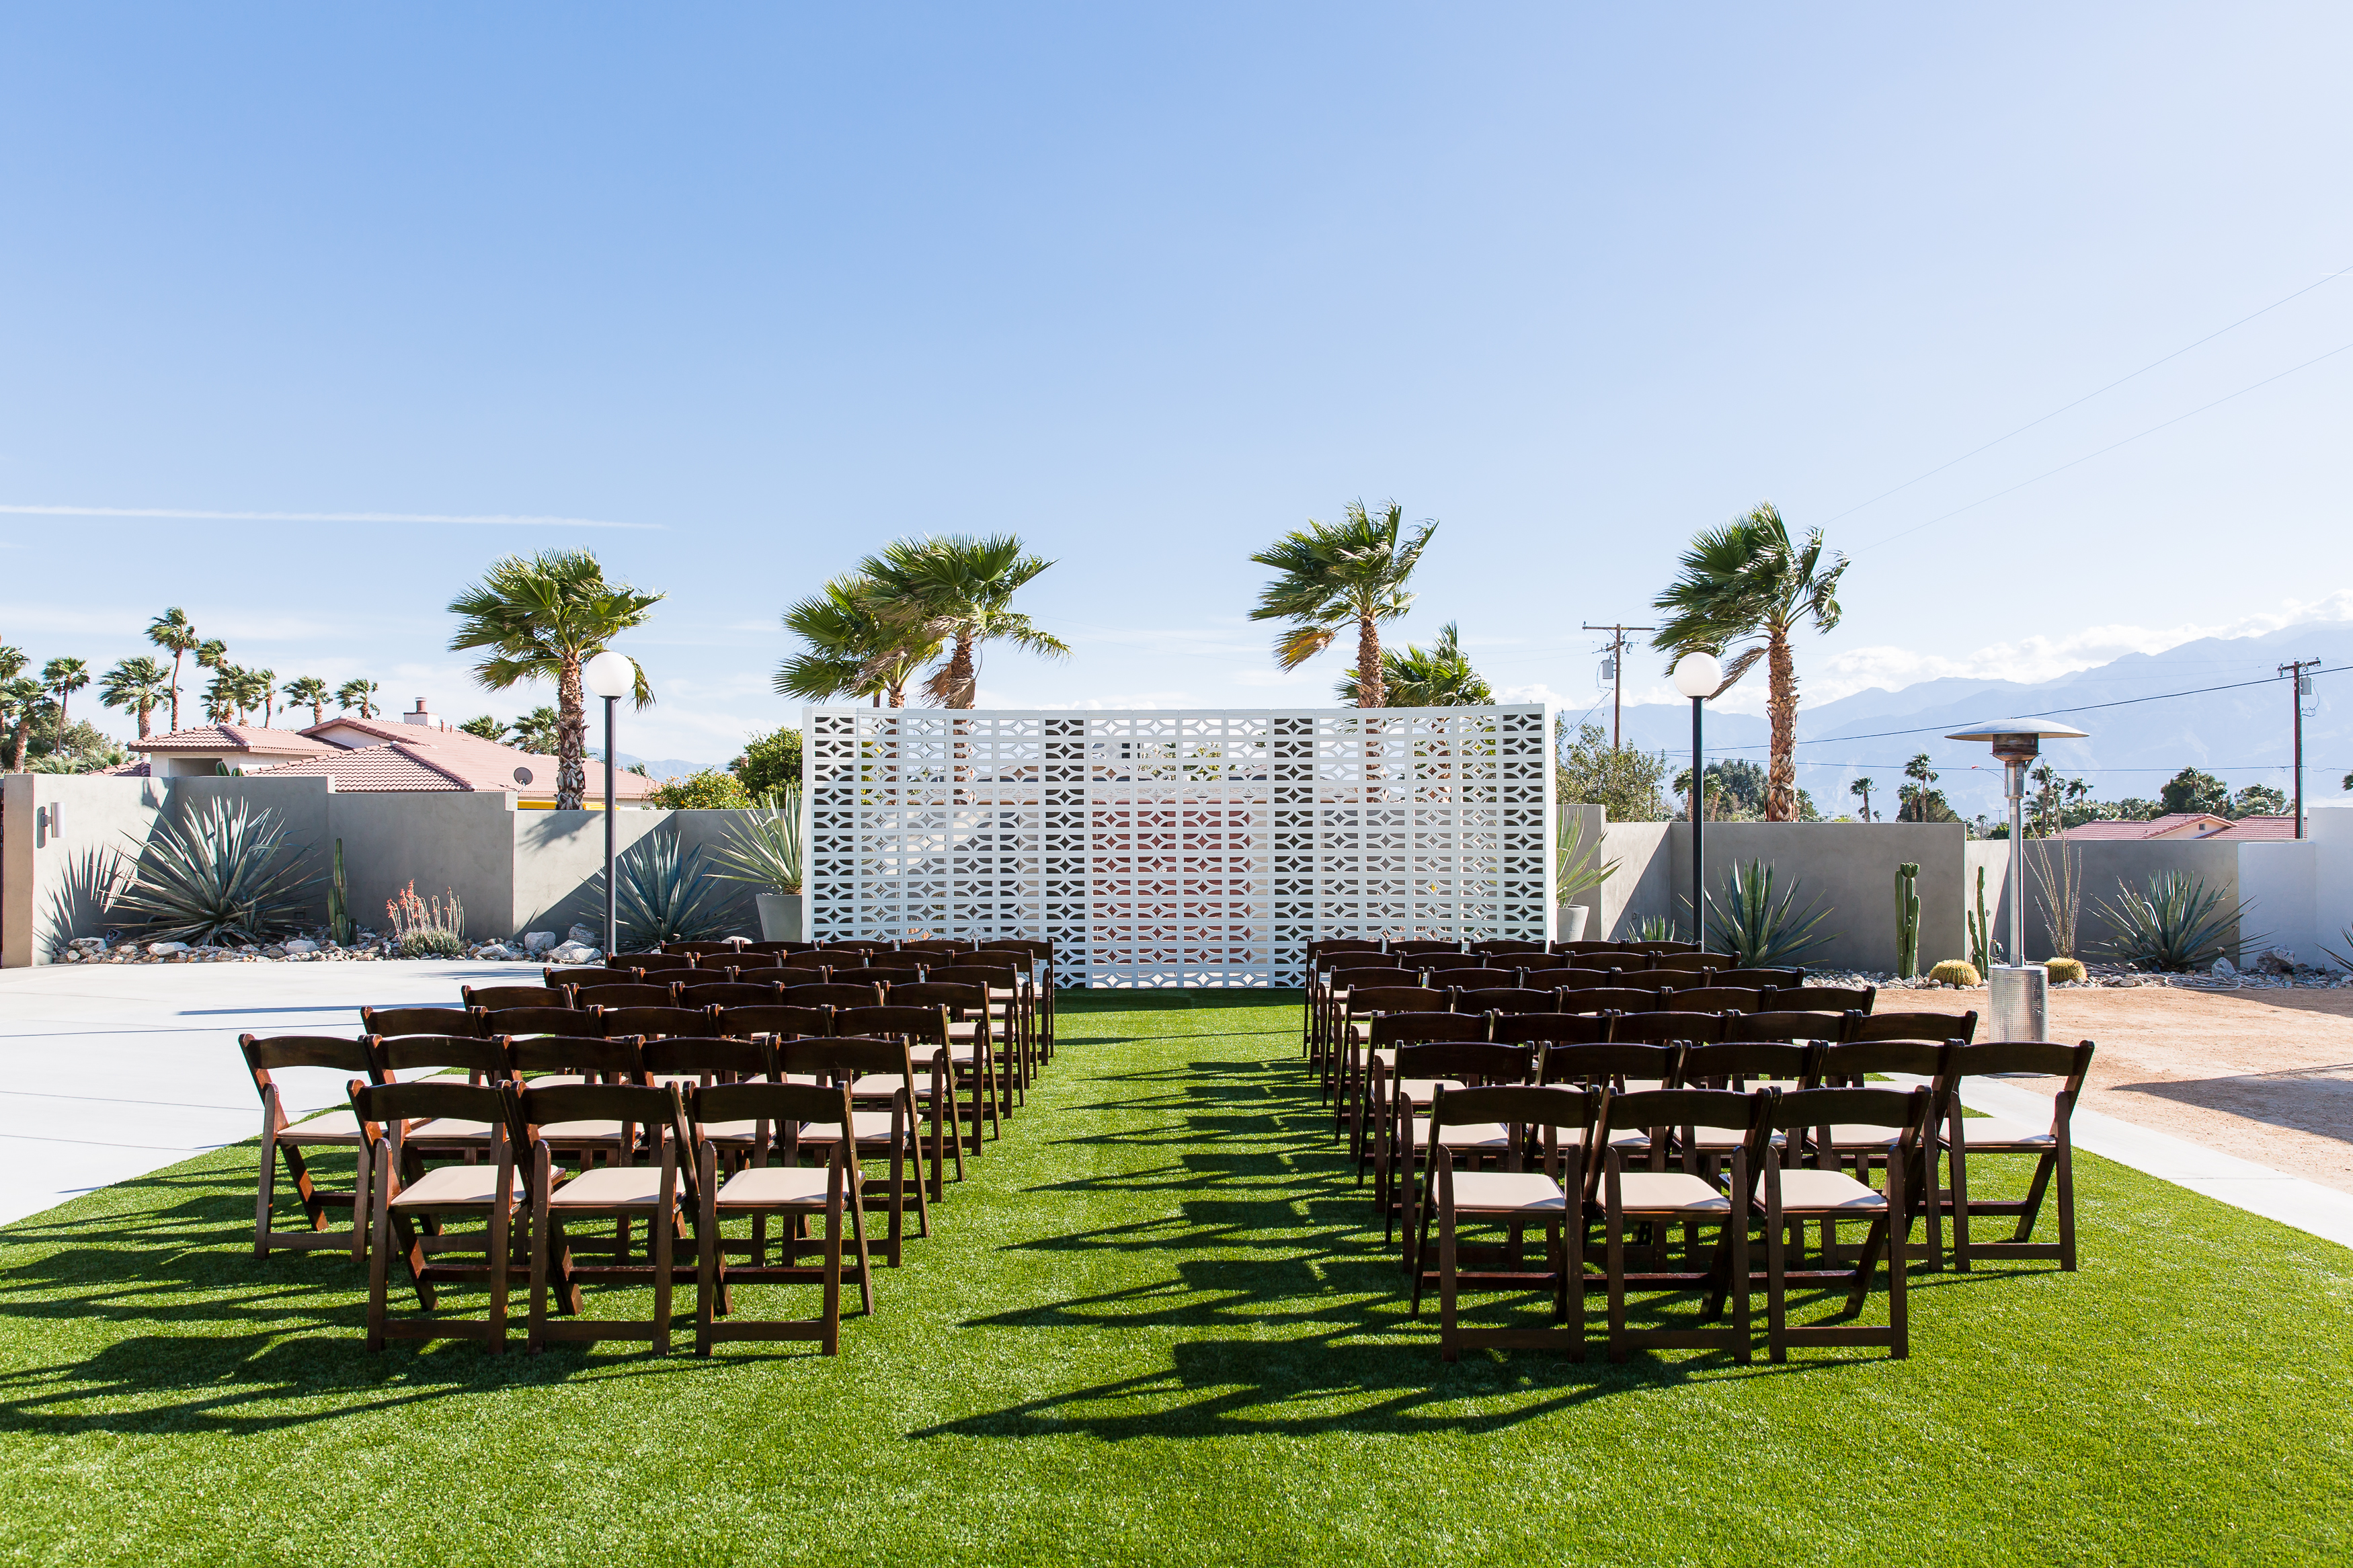 Wedding ceremony site at The Lautner in Desert Hot Springs, CA